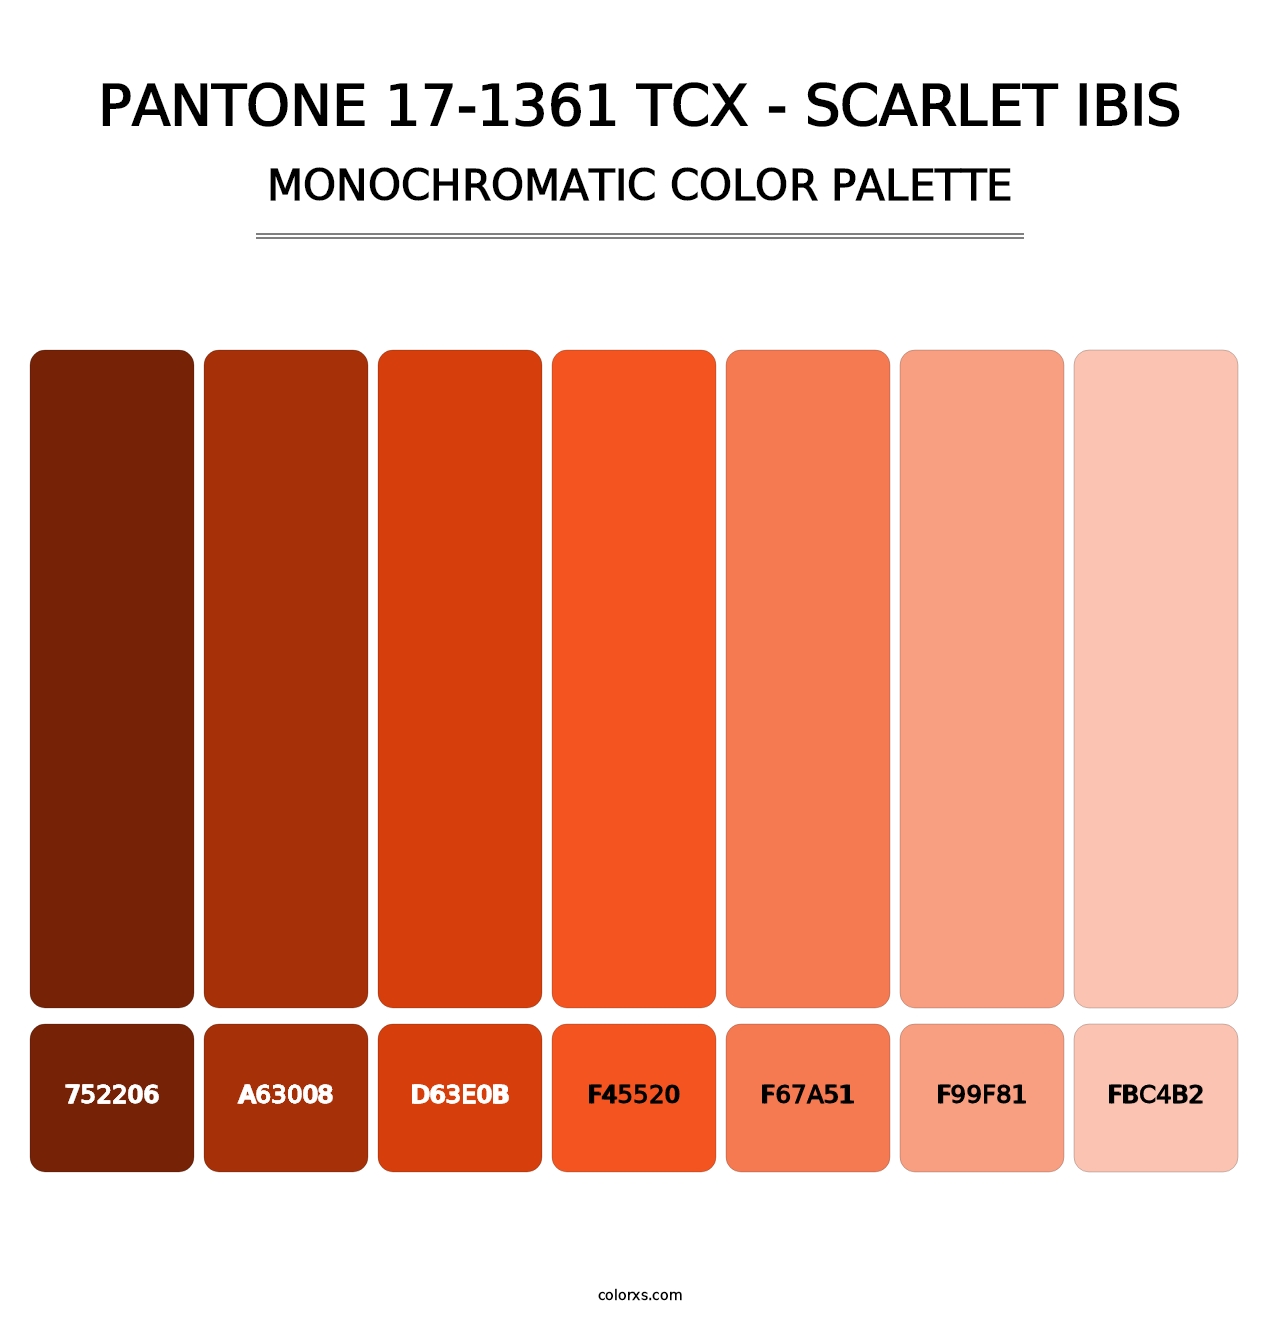 PANTONE 17-1361 TCX - Scarlet Ibis - Monochromatic Color Palette